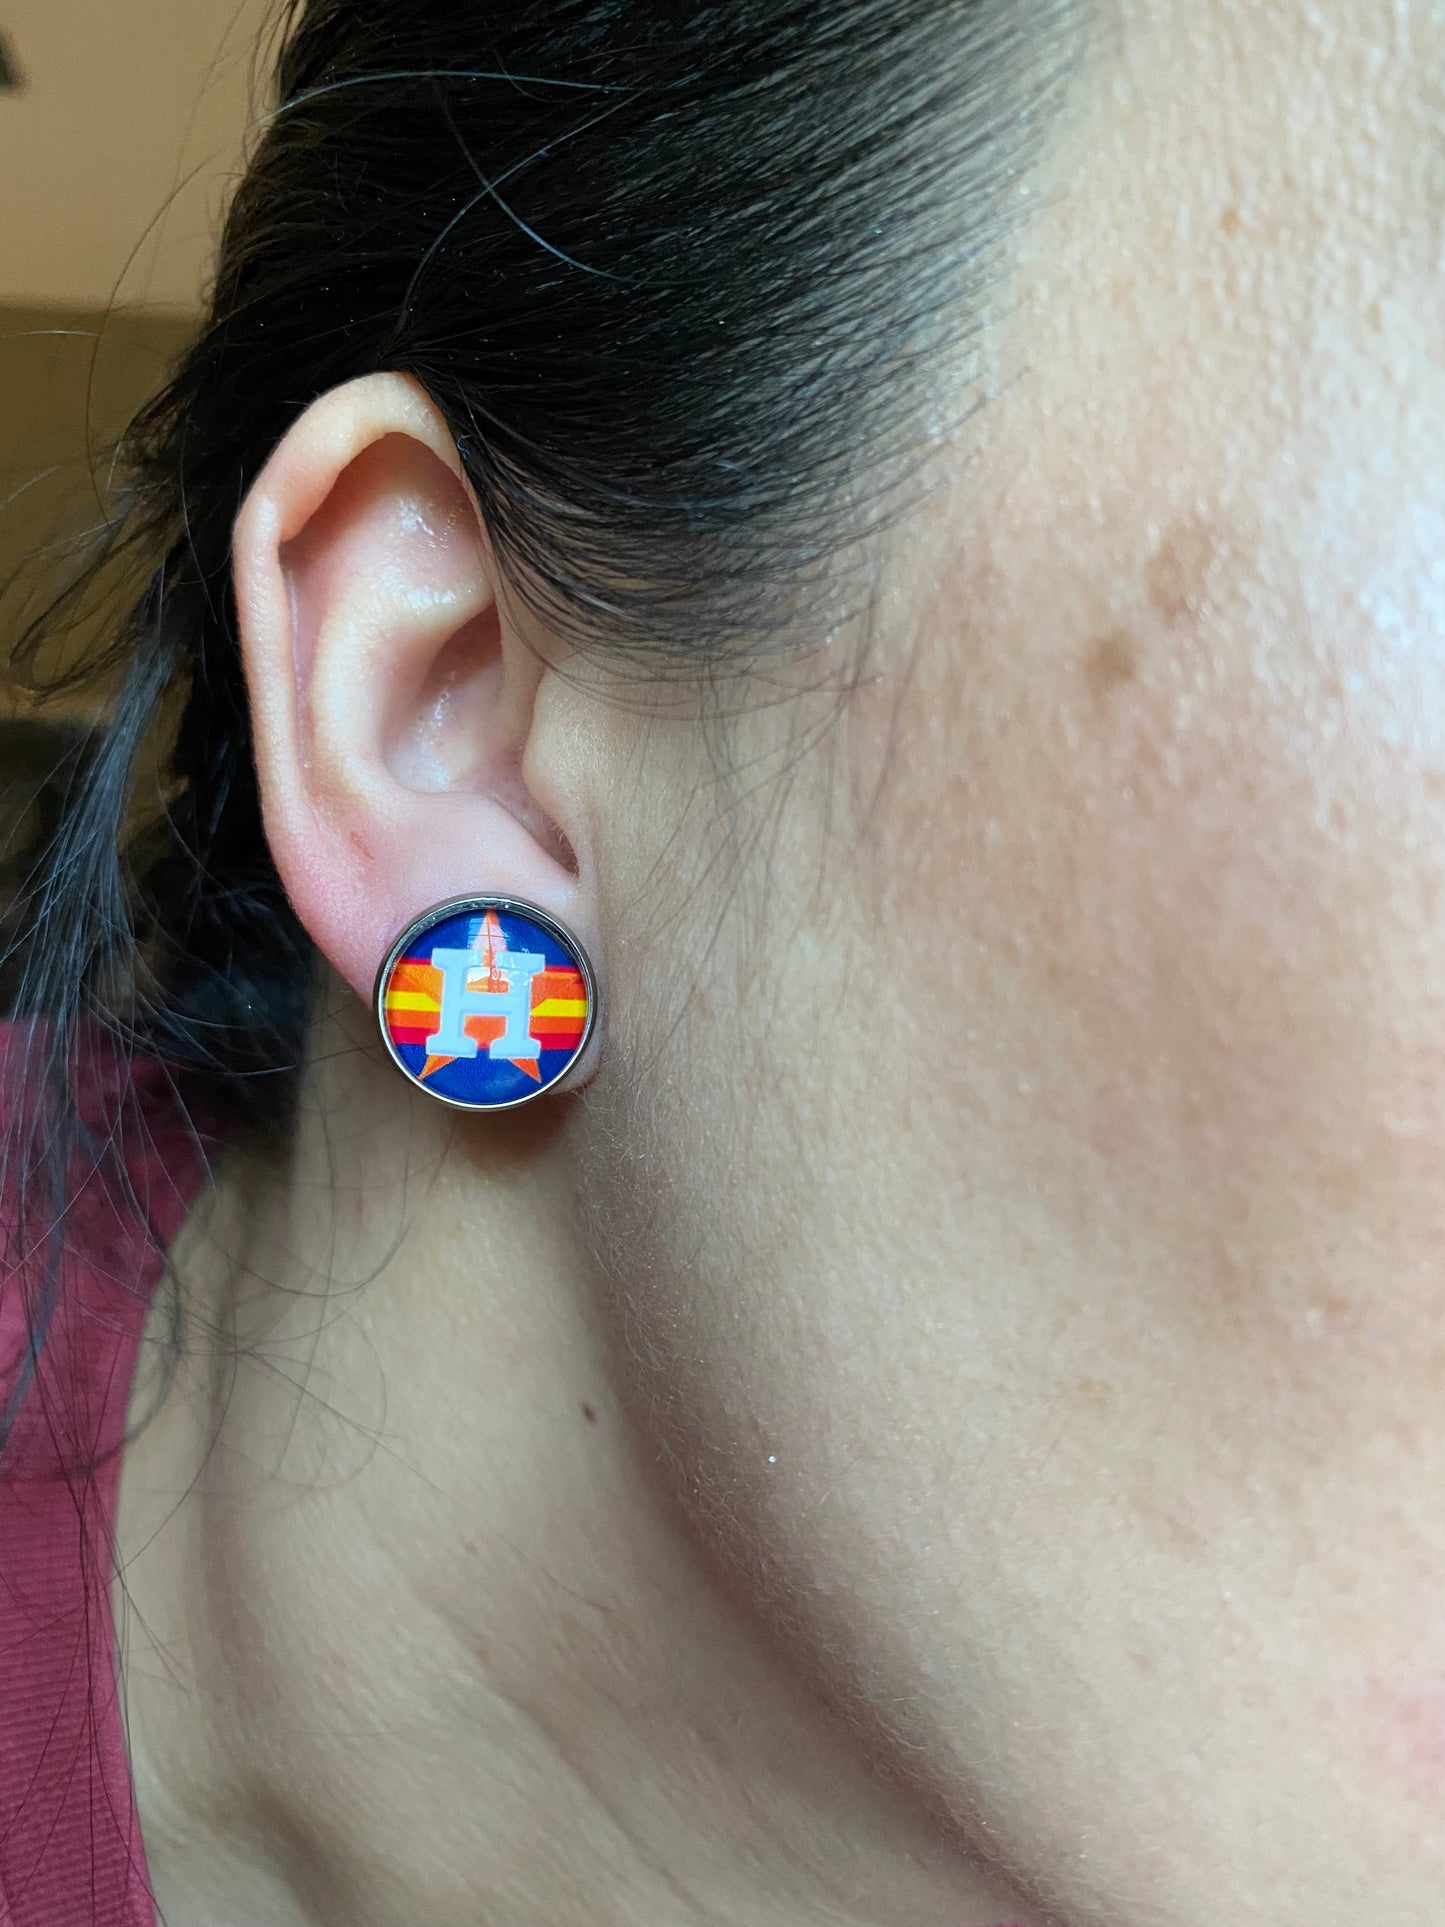 Houston Astros stud earrings